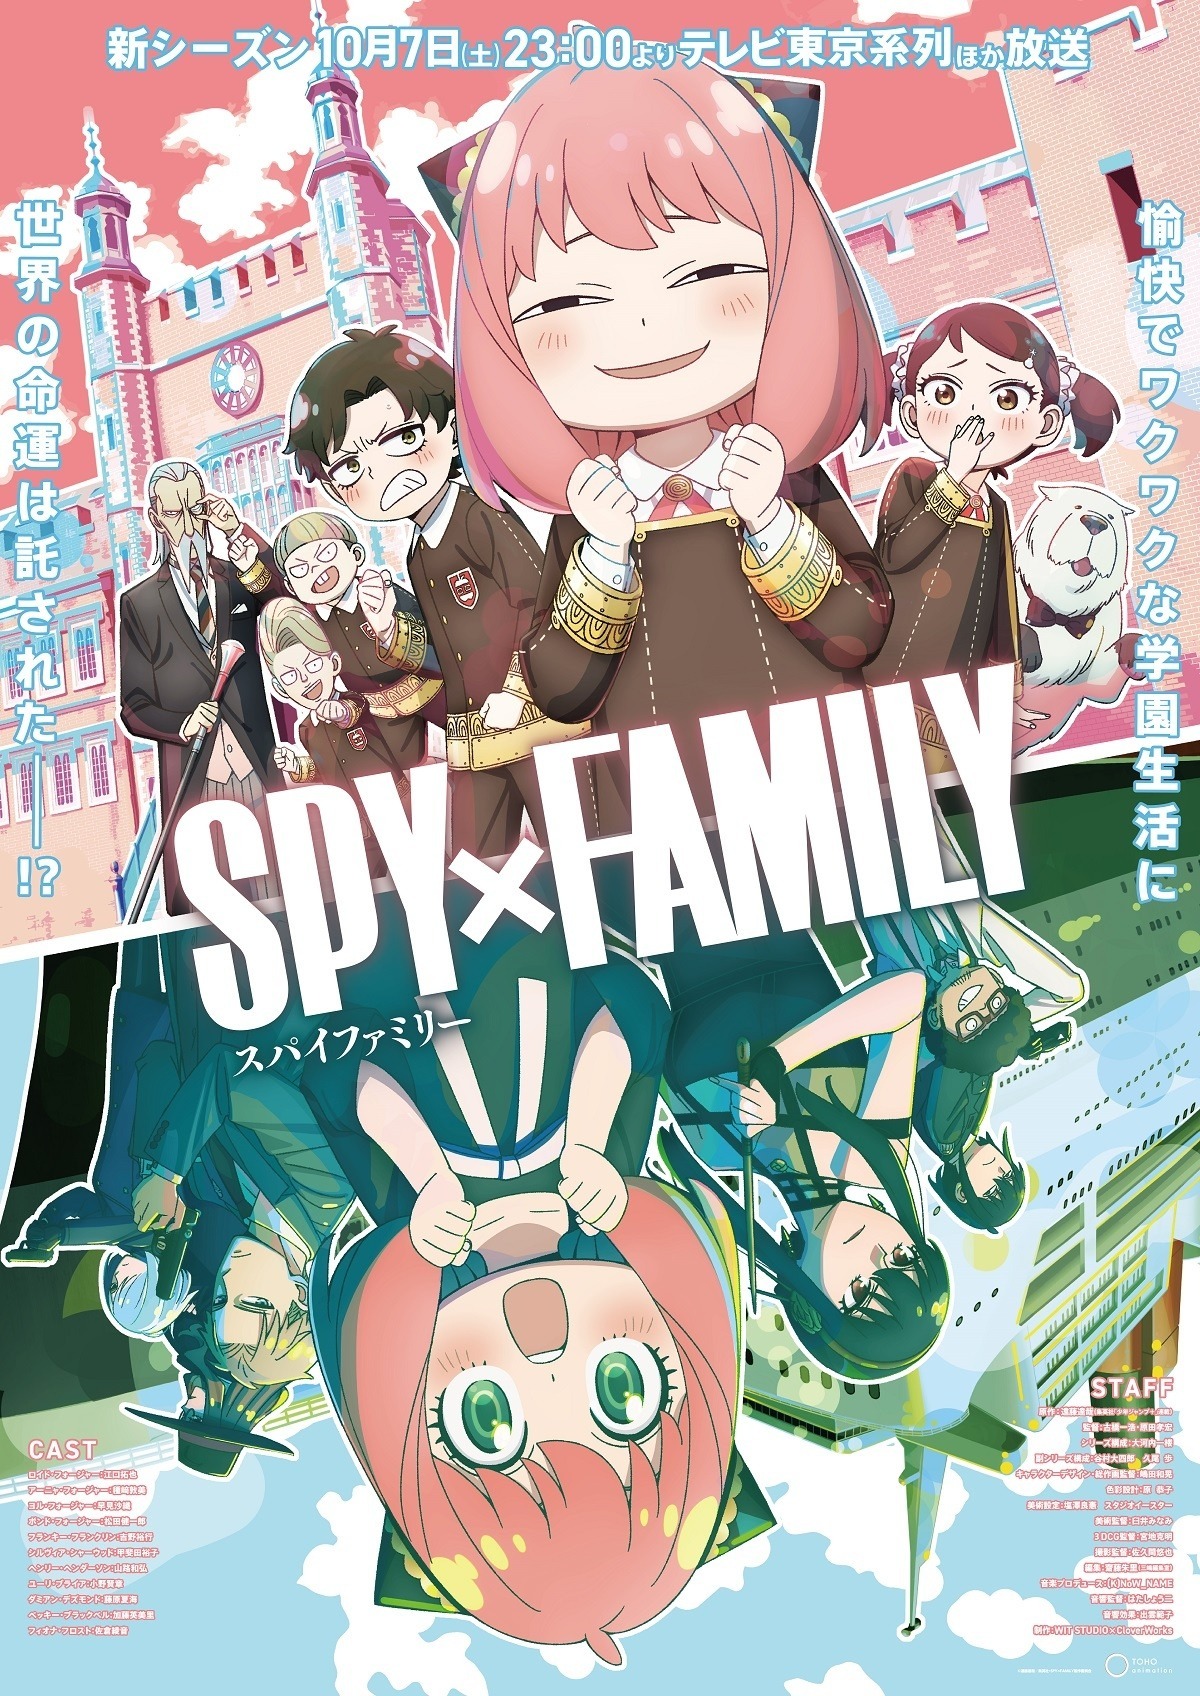 Spy x Family Returns in 2023 With Season 2 & a Movie